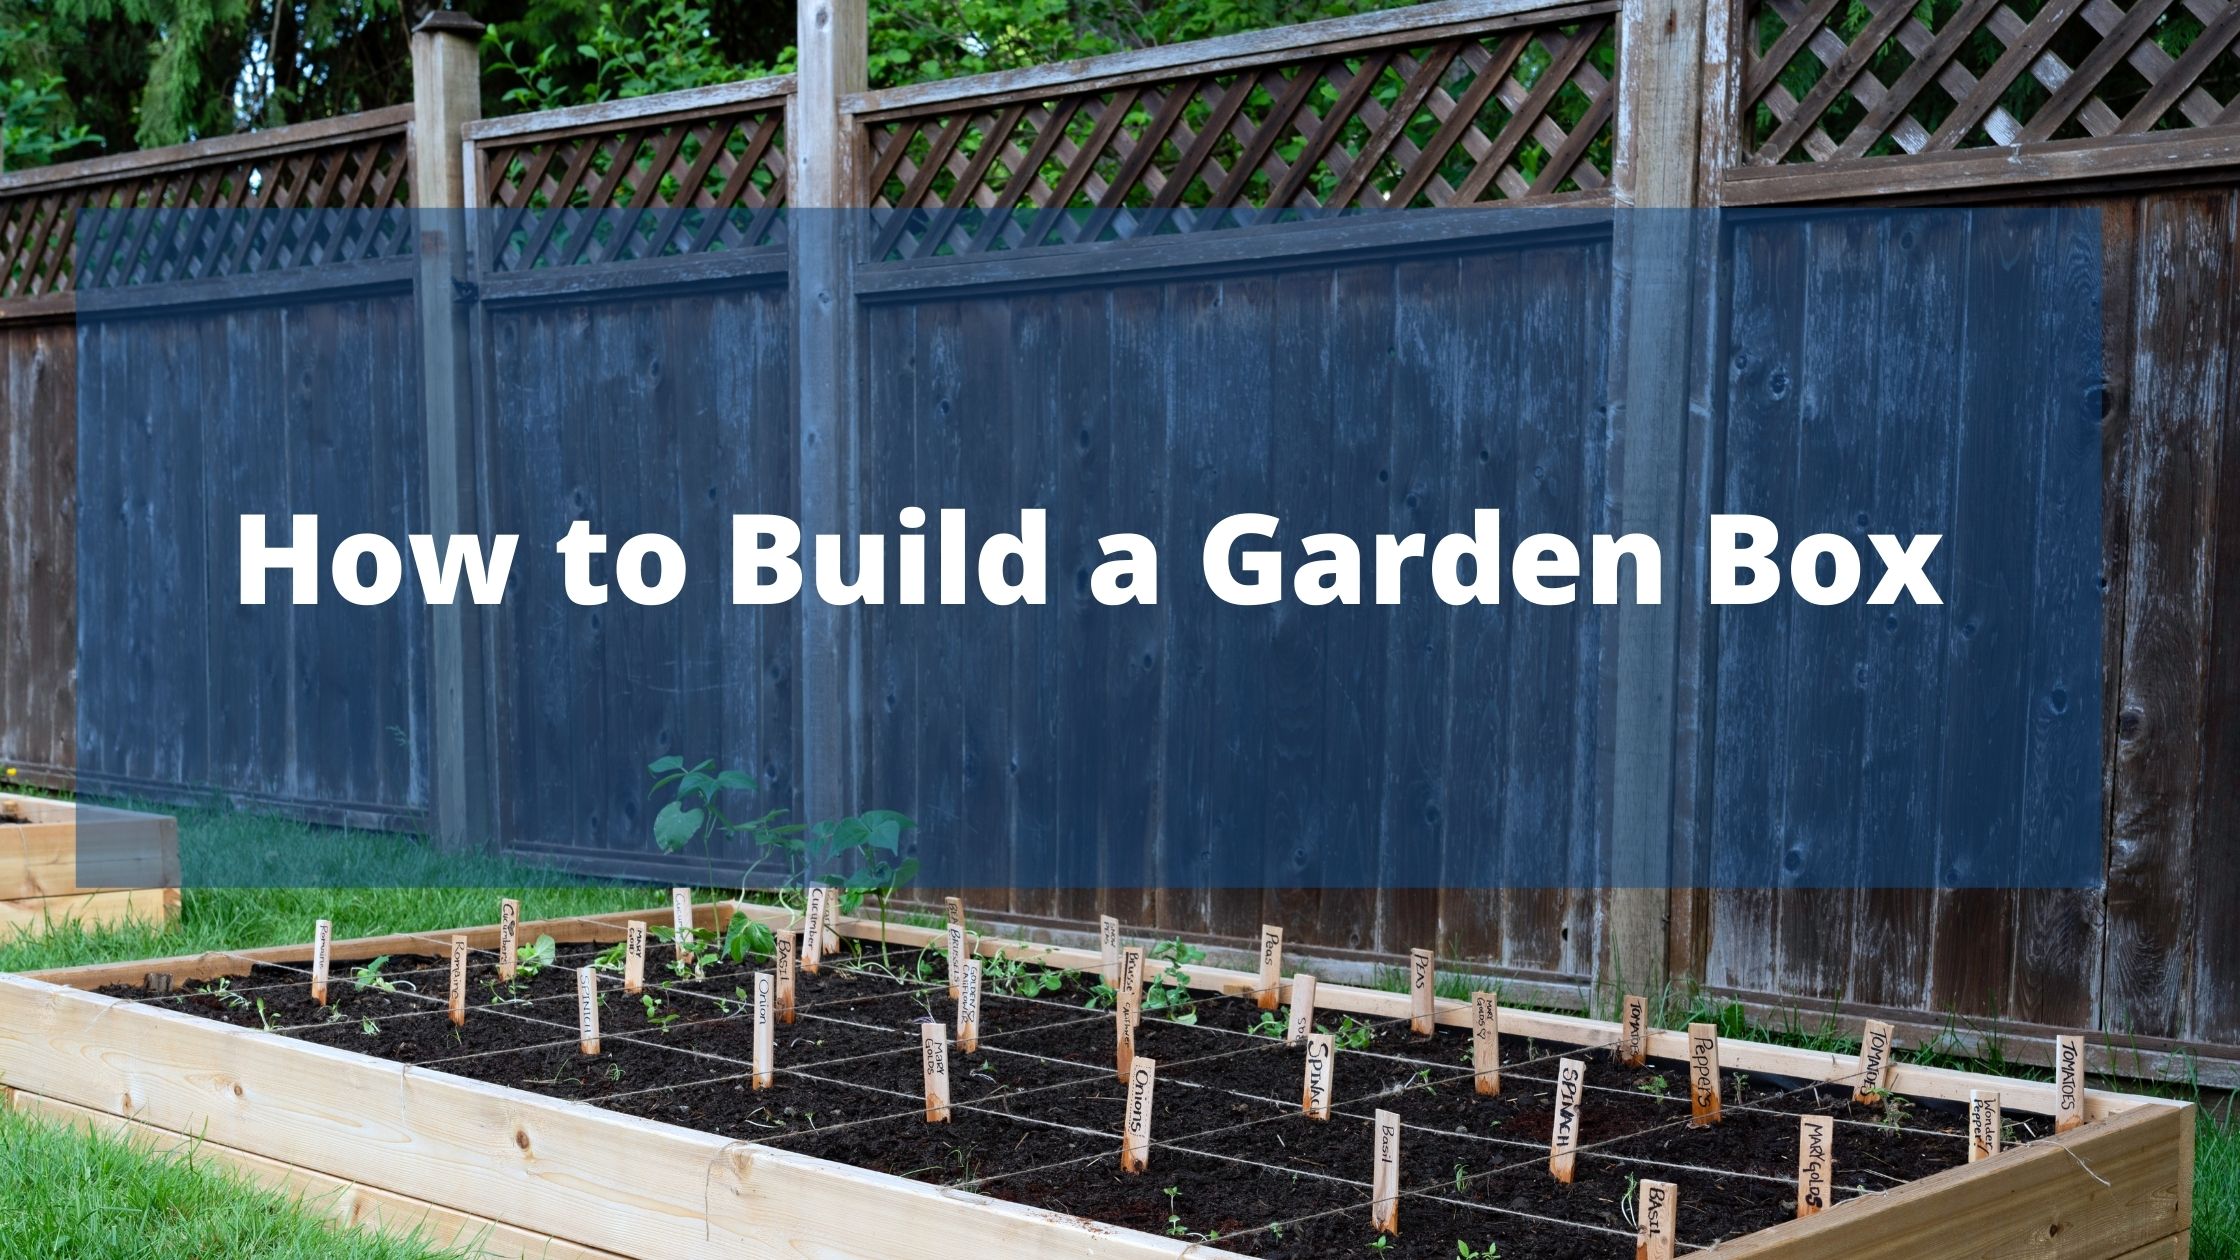 https://handymanconnection.com/franchise/wp-content/uploads/sites/2/2021/06/How-to-Build-a-Garden-Box.jpg